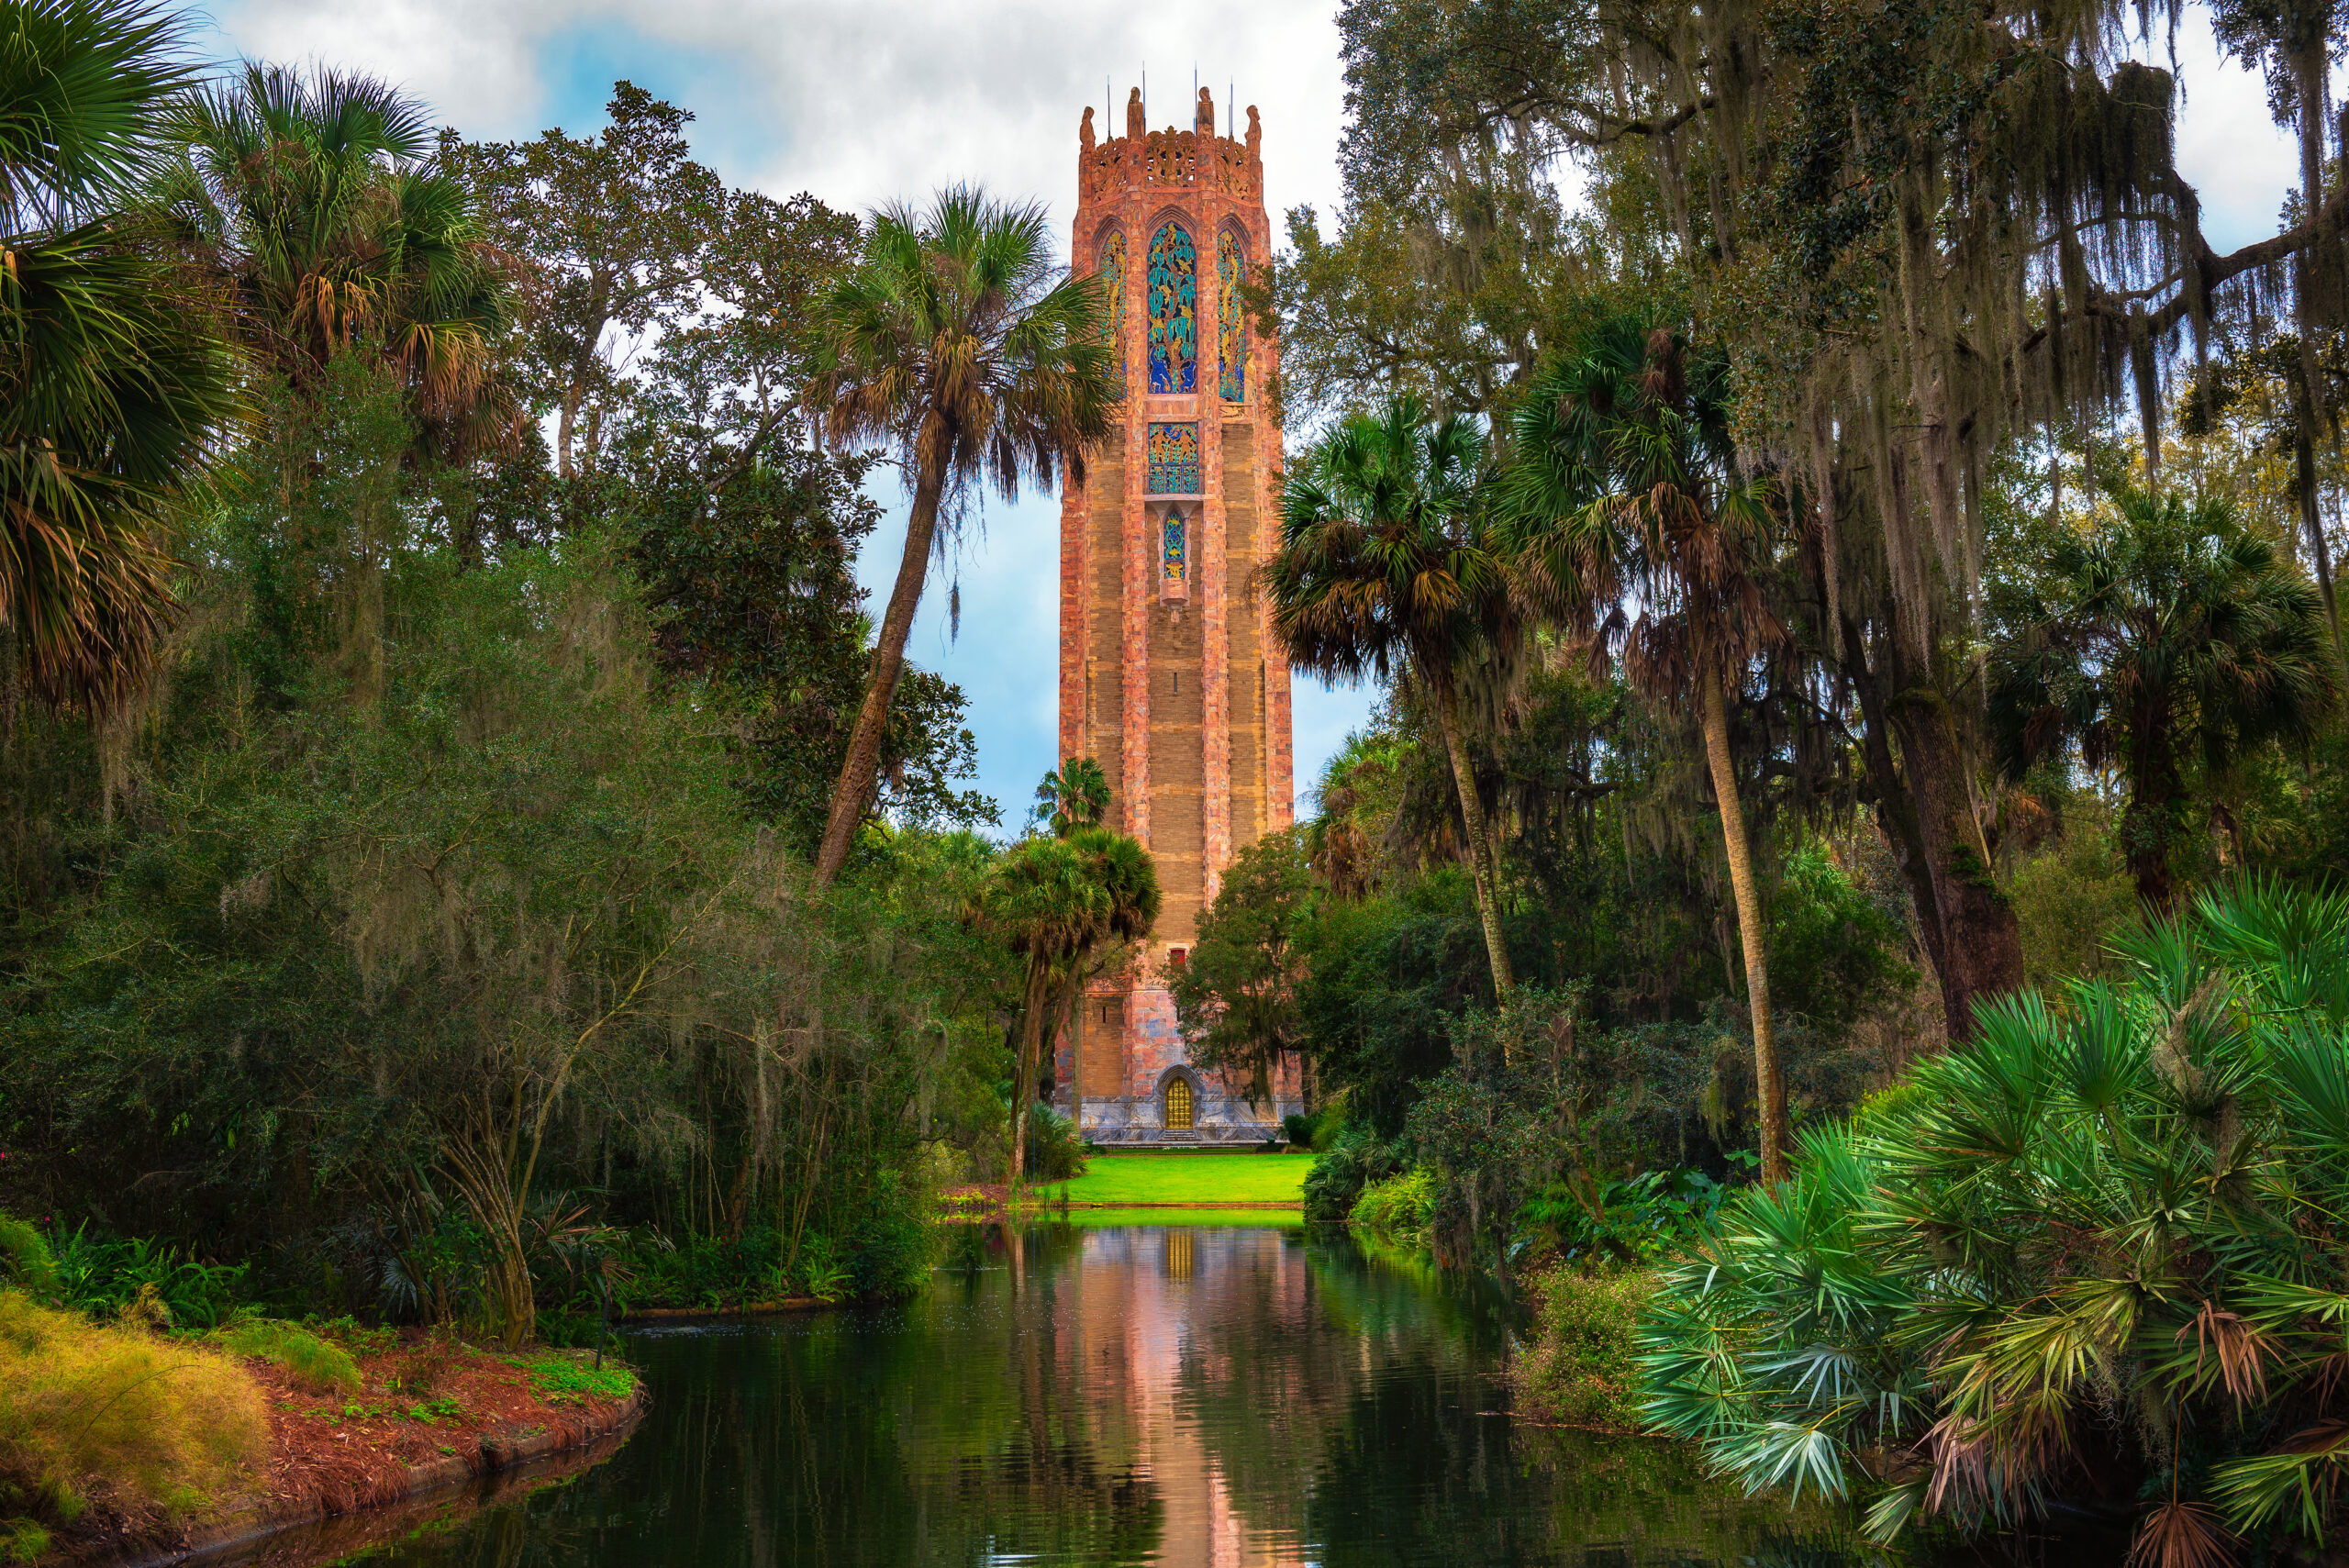 The Singing Tower in Bok Tower Gardens near Lake Wales, Florida.